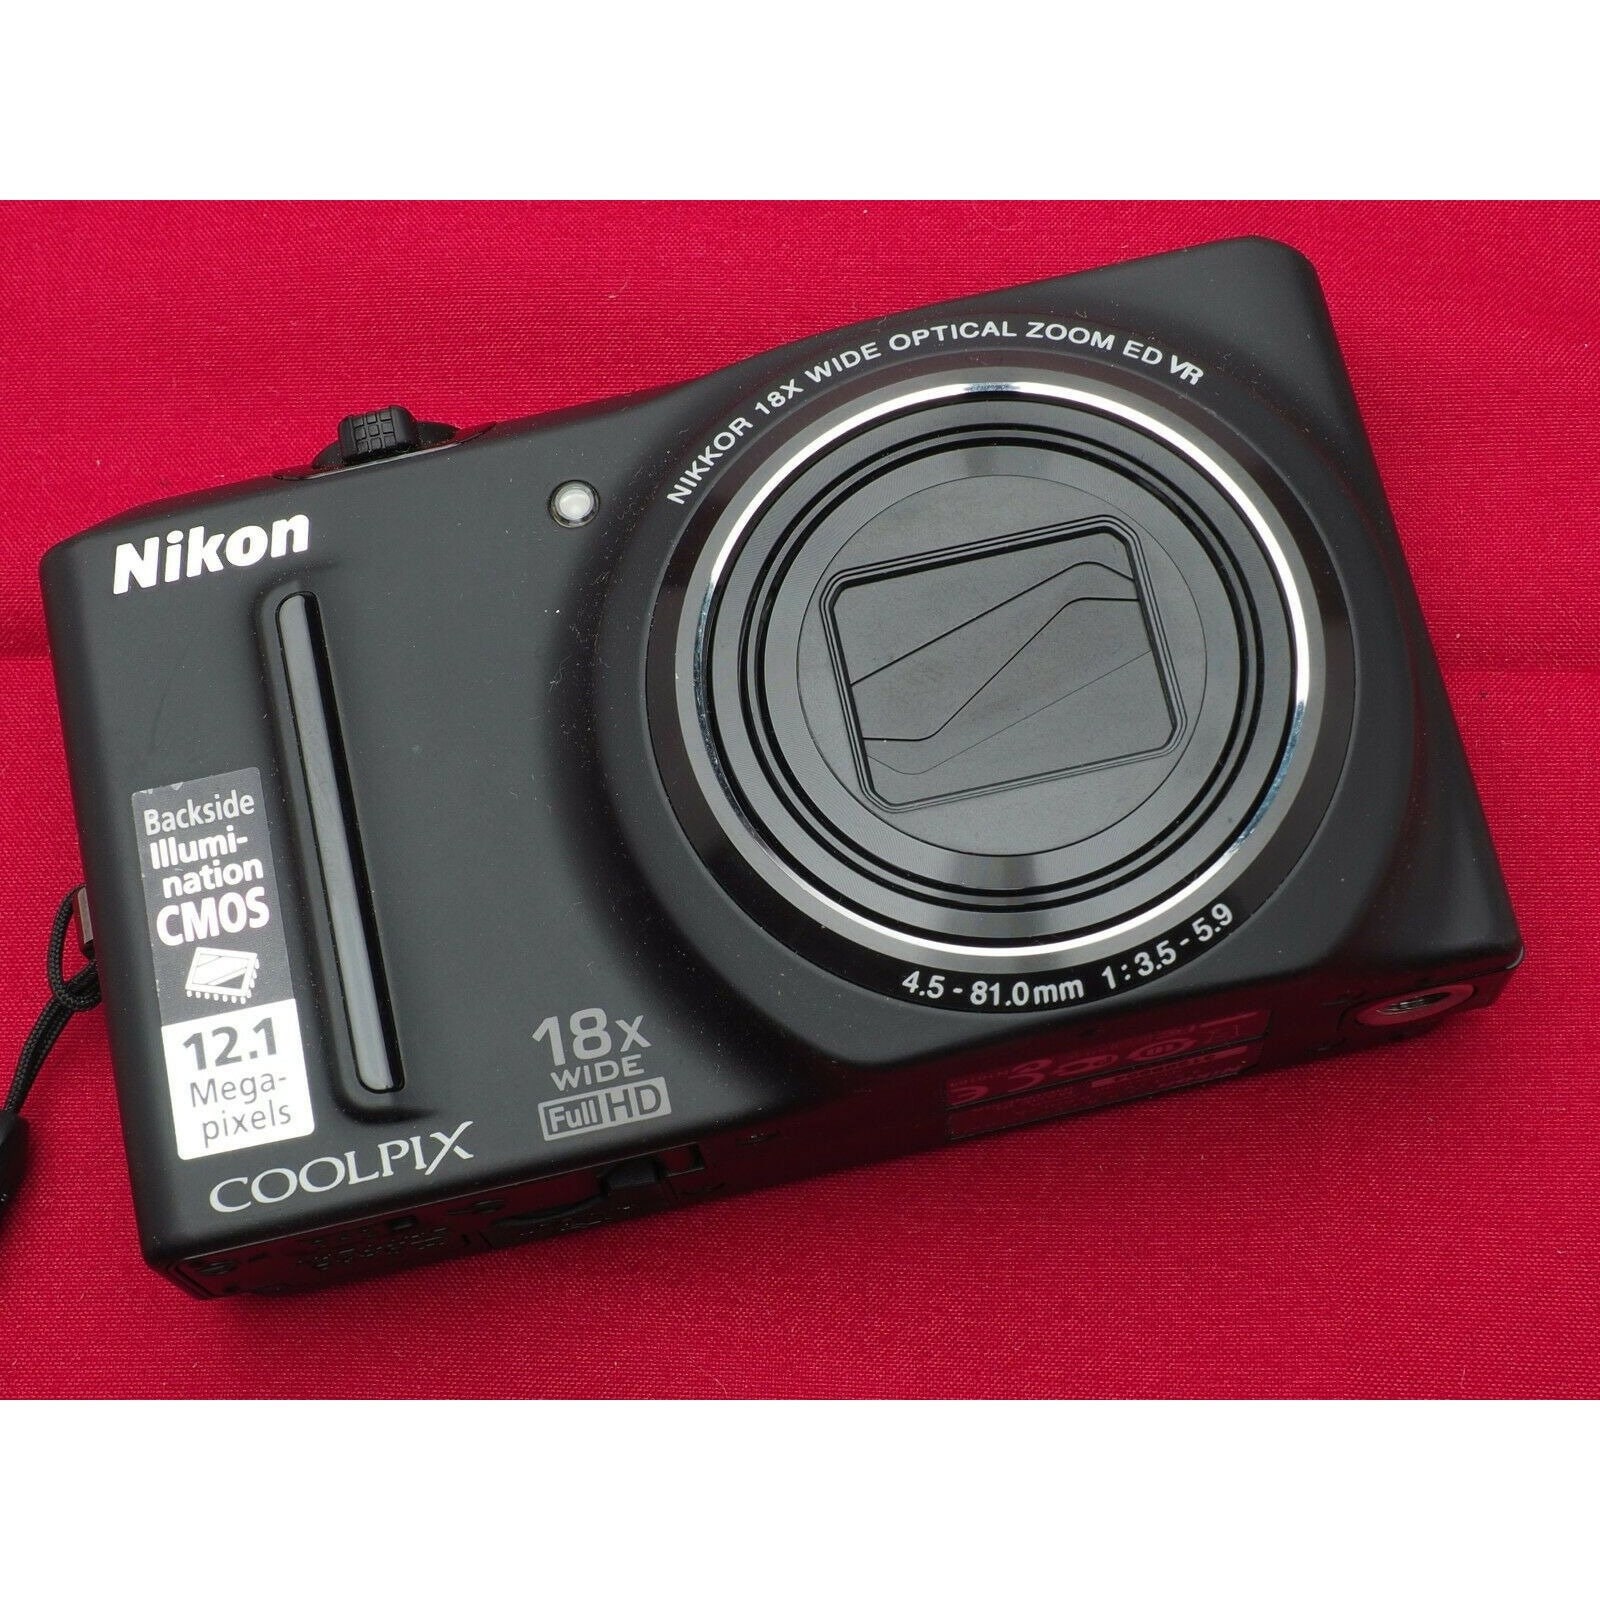 Nikon coolpix s9100 デジタルカメラ - デジタルカメラ